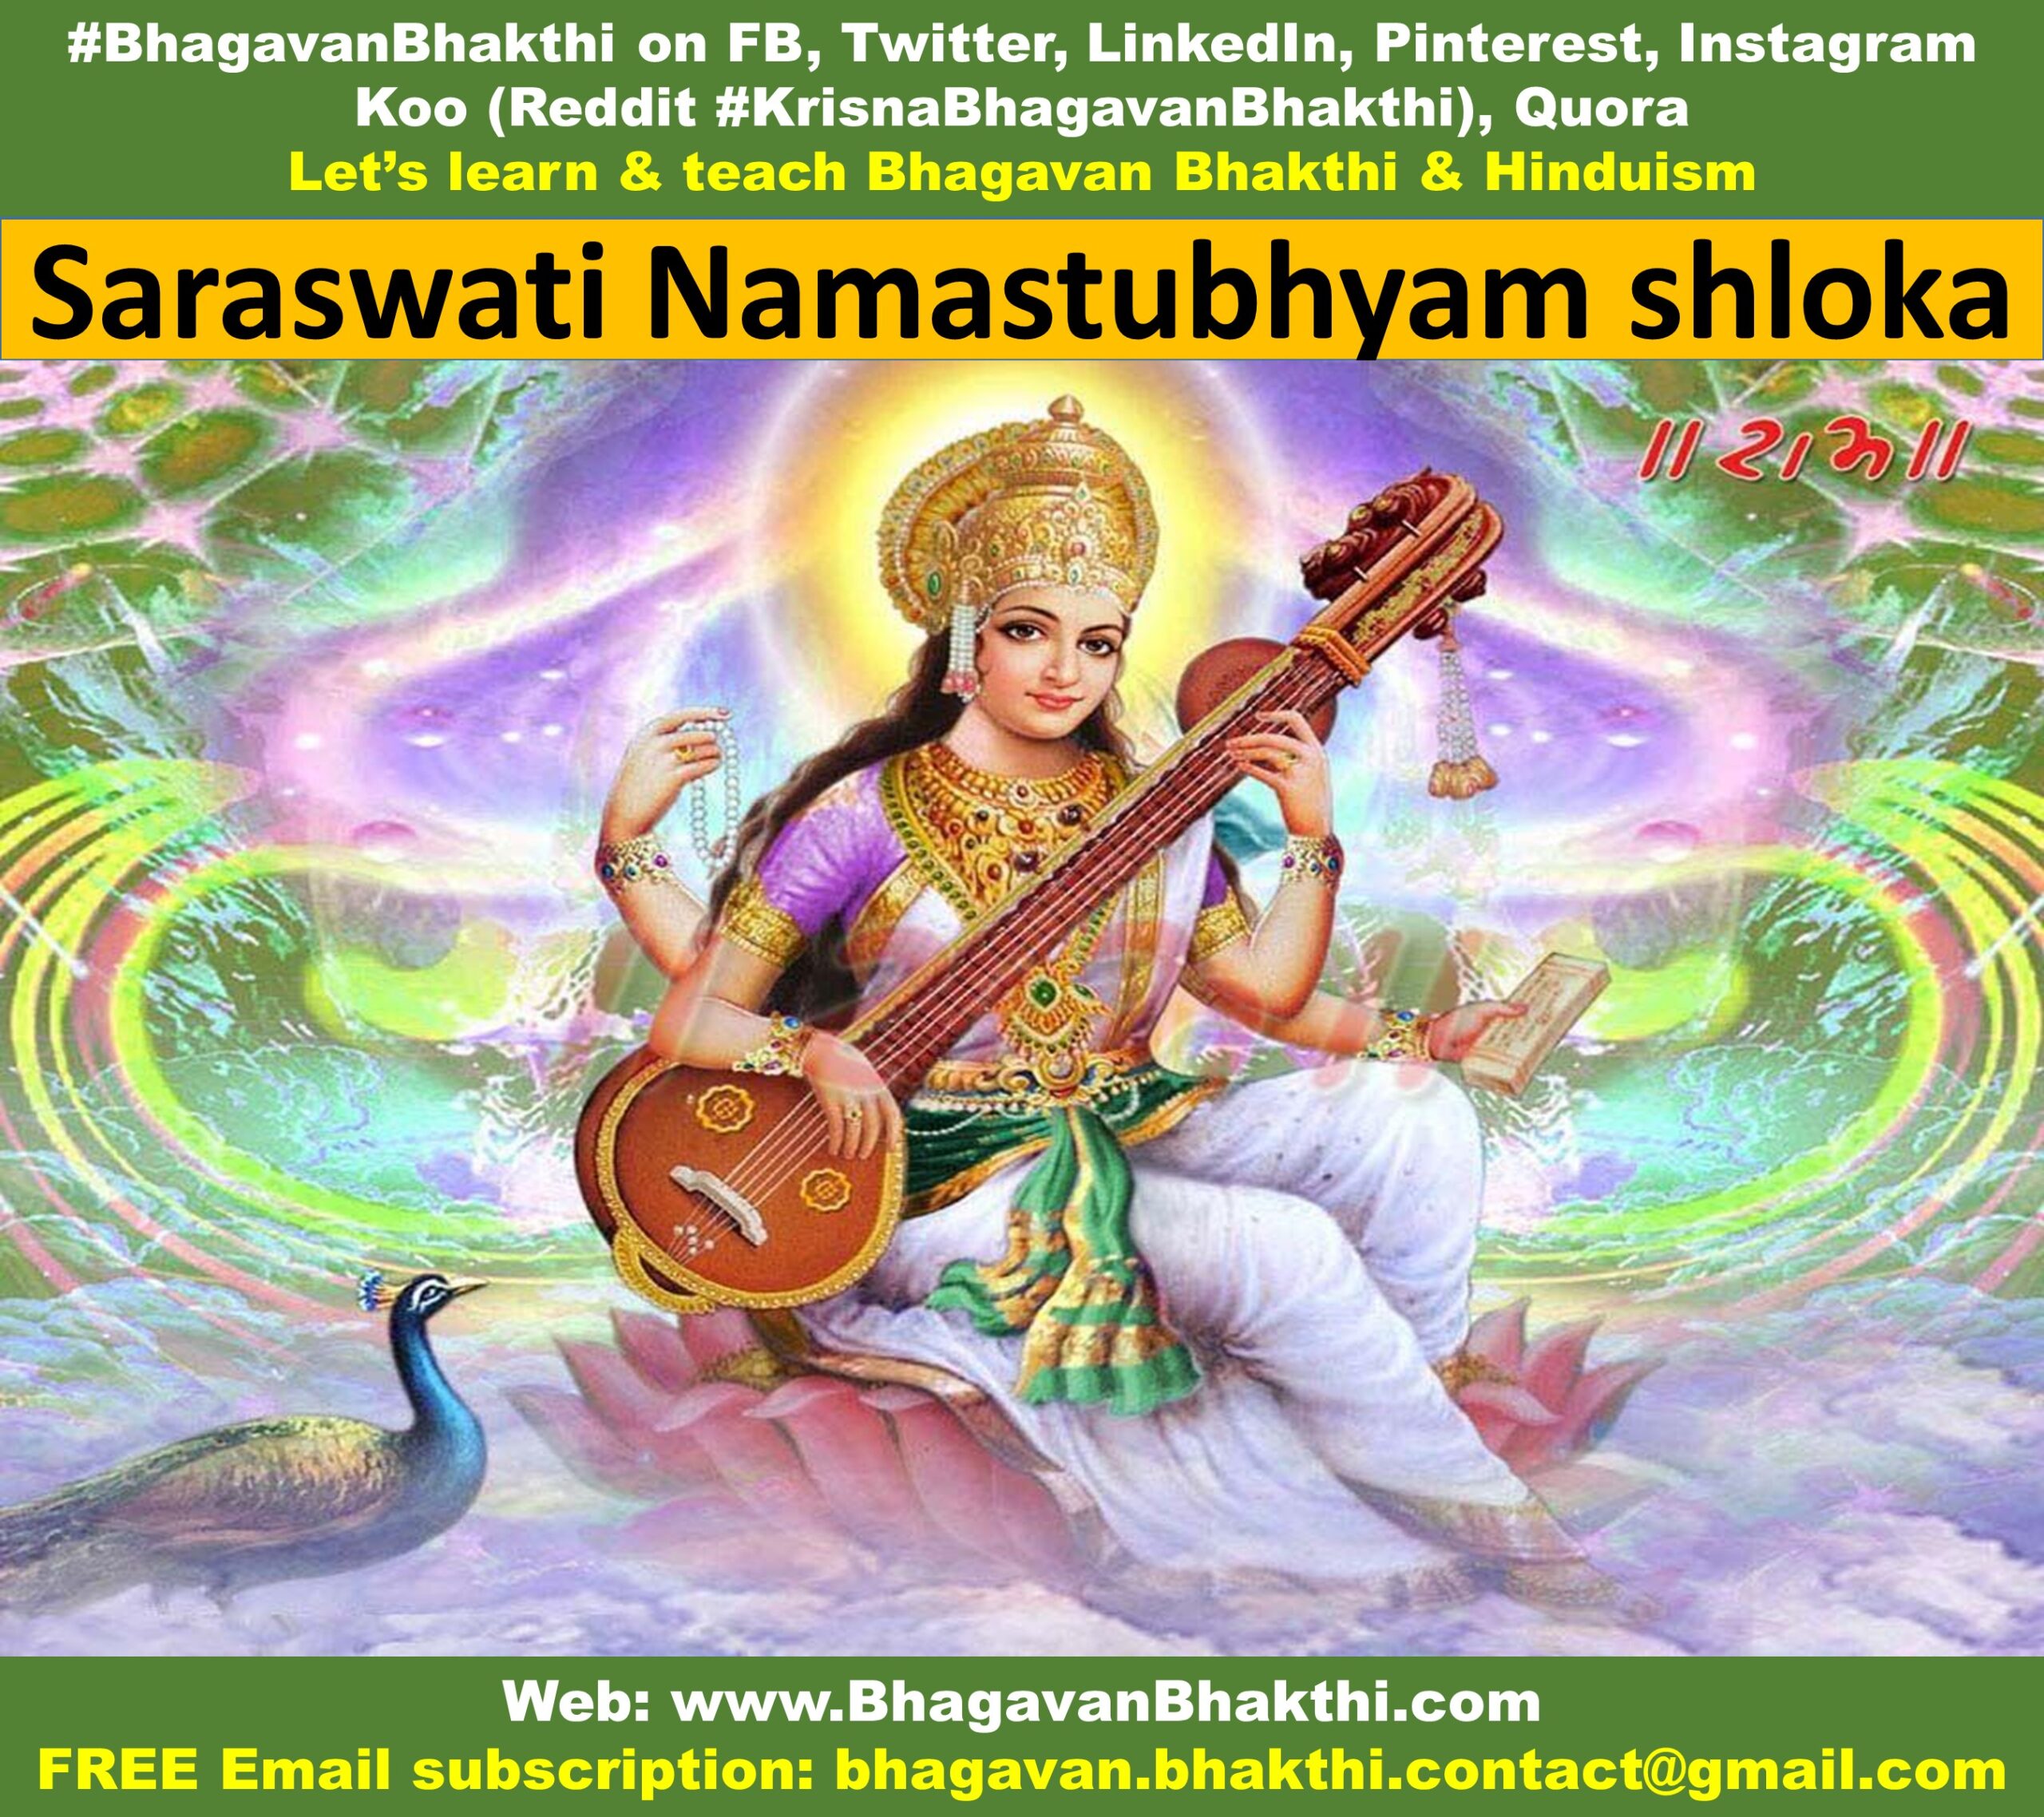 Saraswati Namastubhyam stotram lyrics (For Education, knowledge etc.) in Sanskrit, Kannada, English